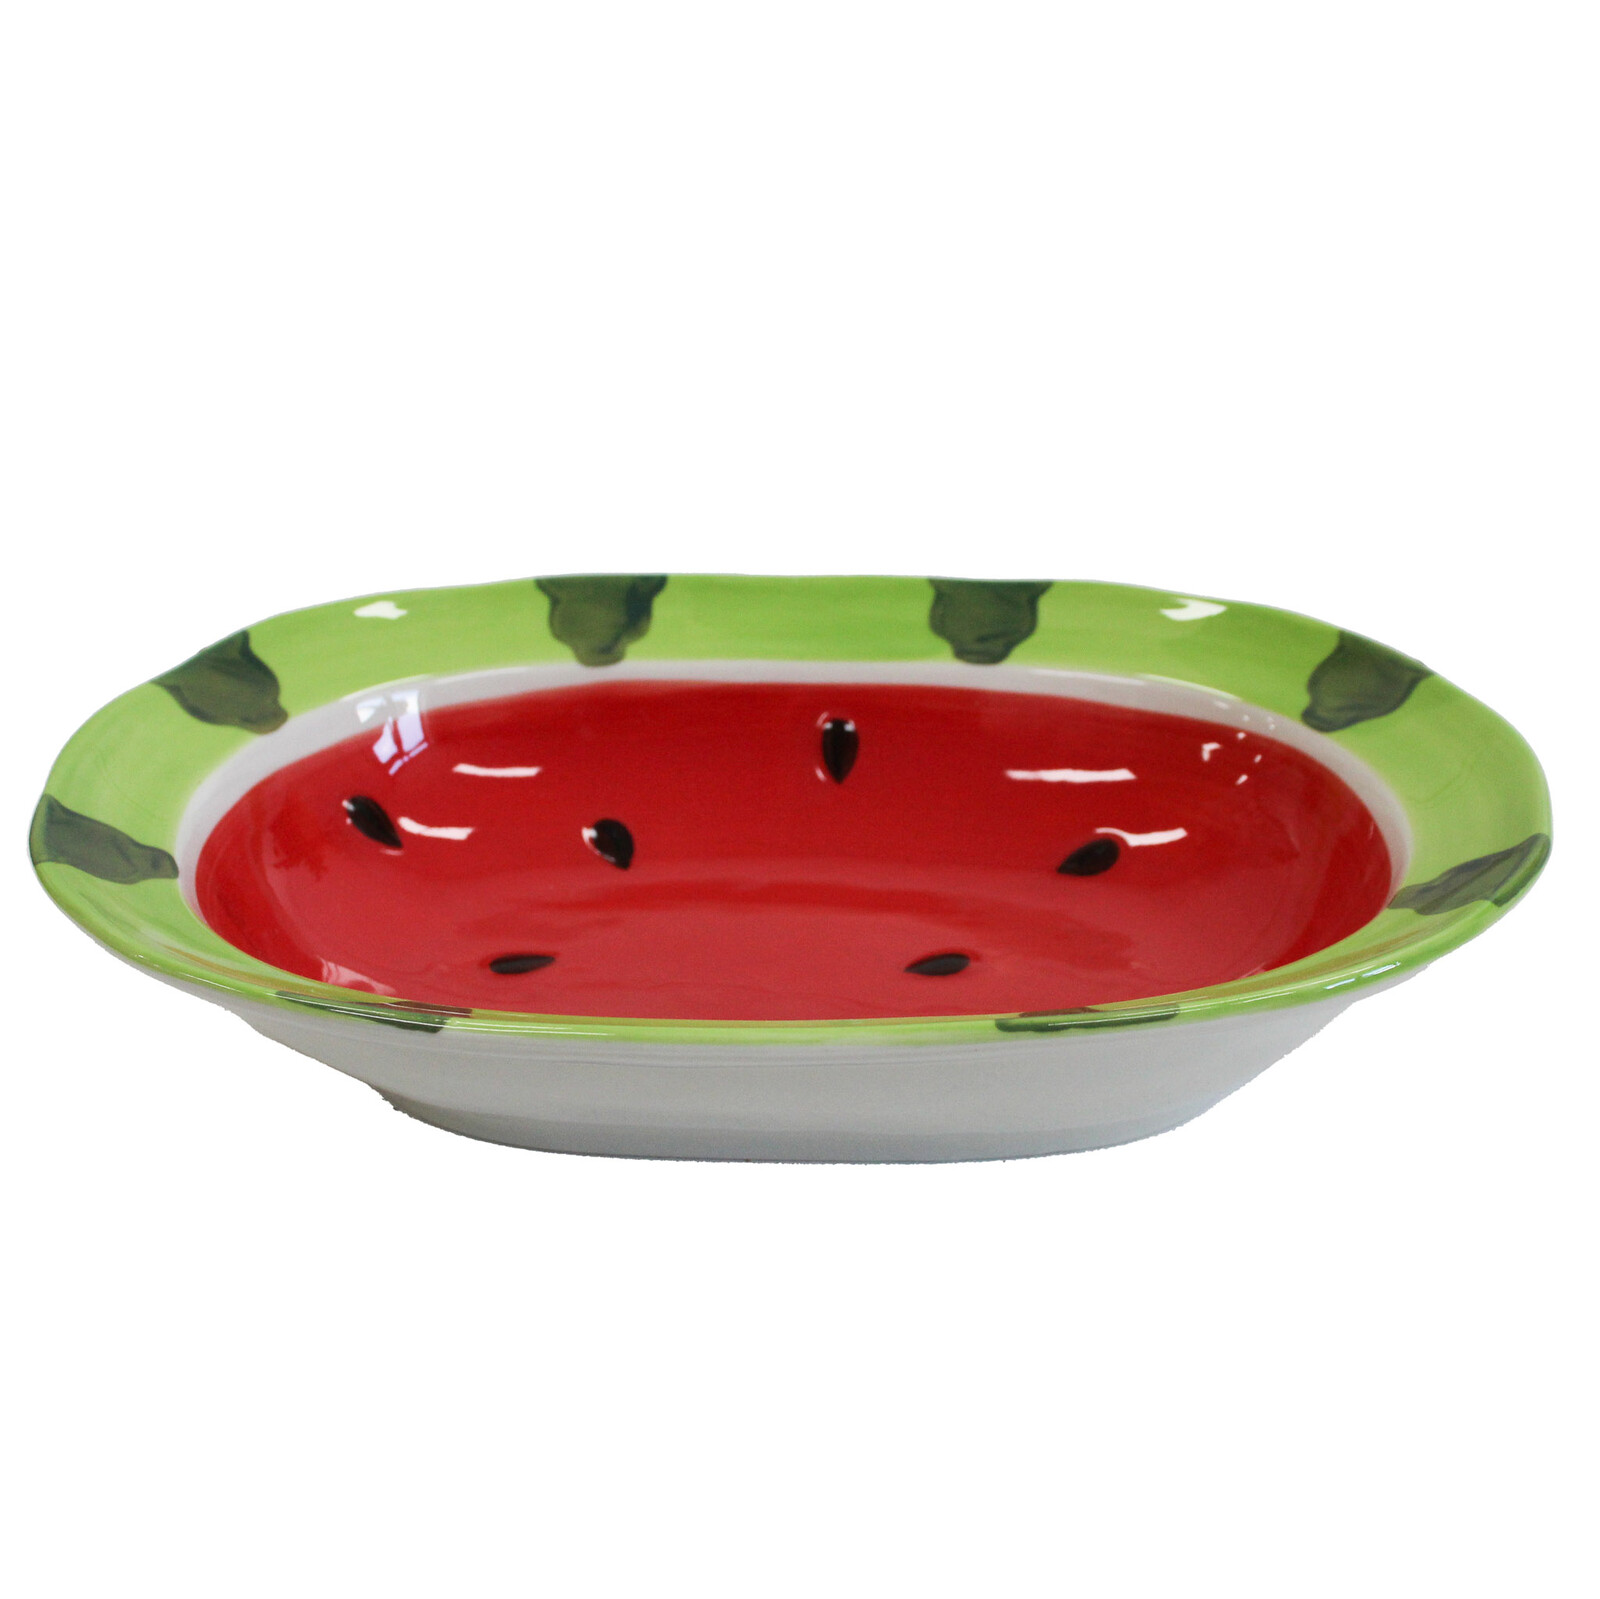 Plate Watermelon Lrg